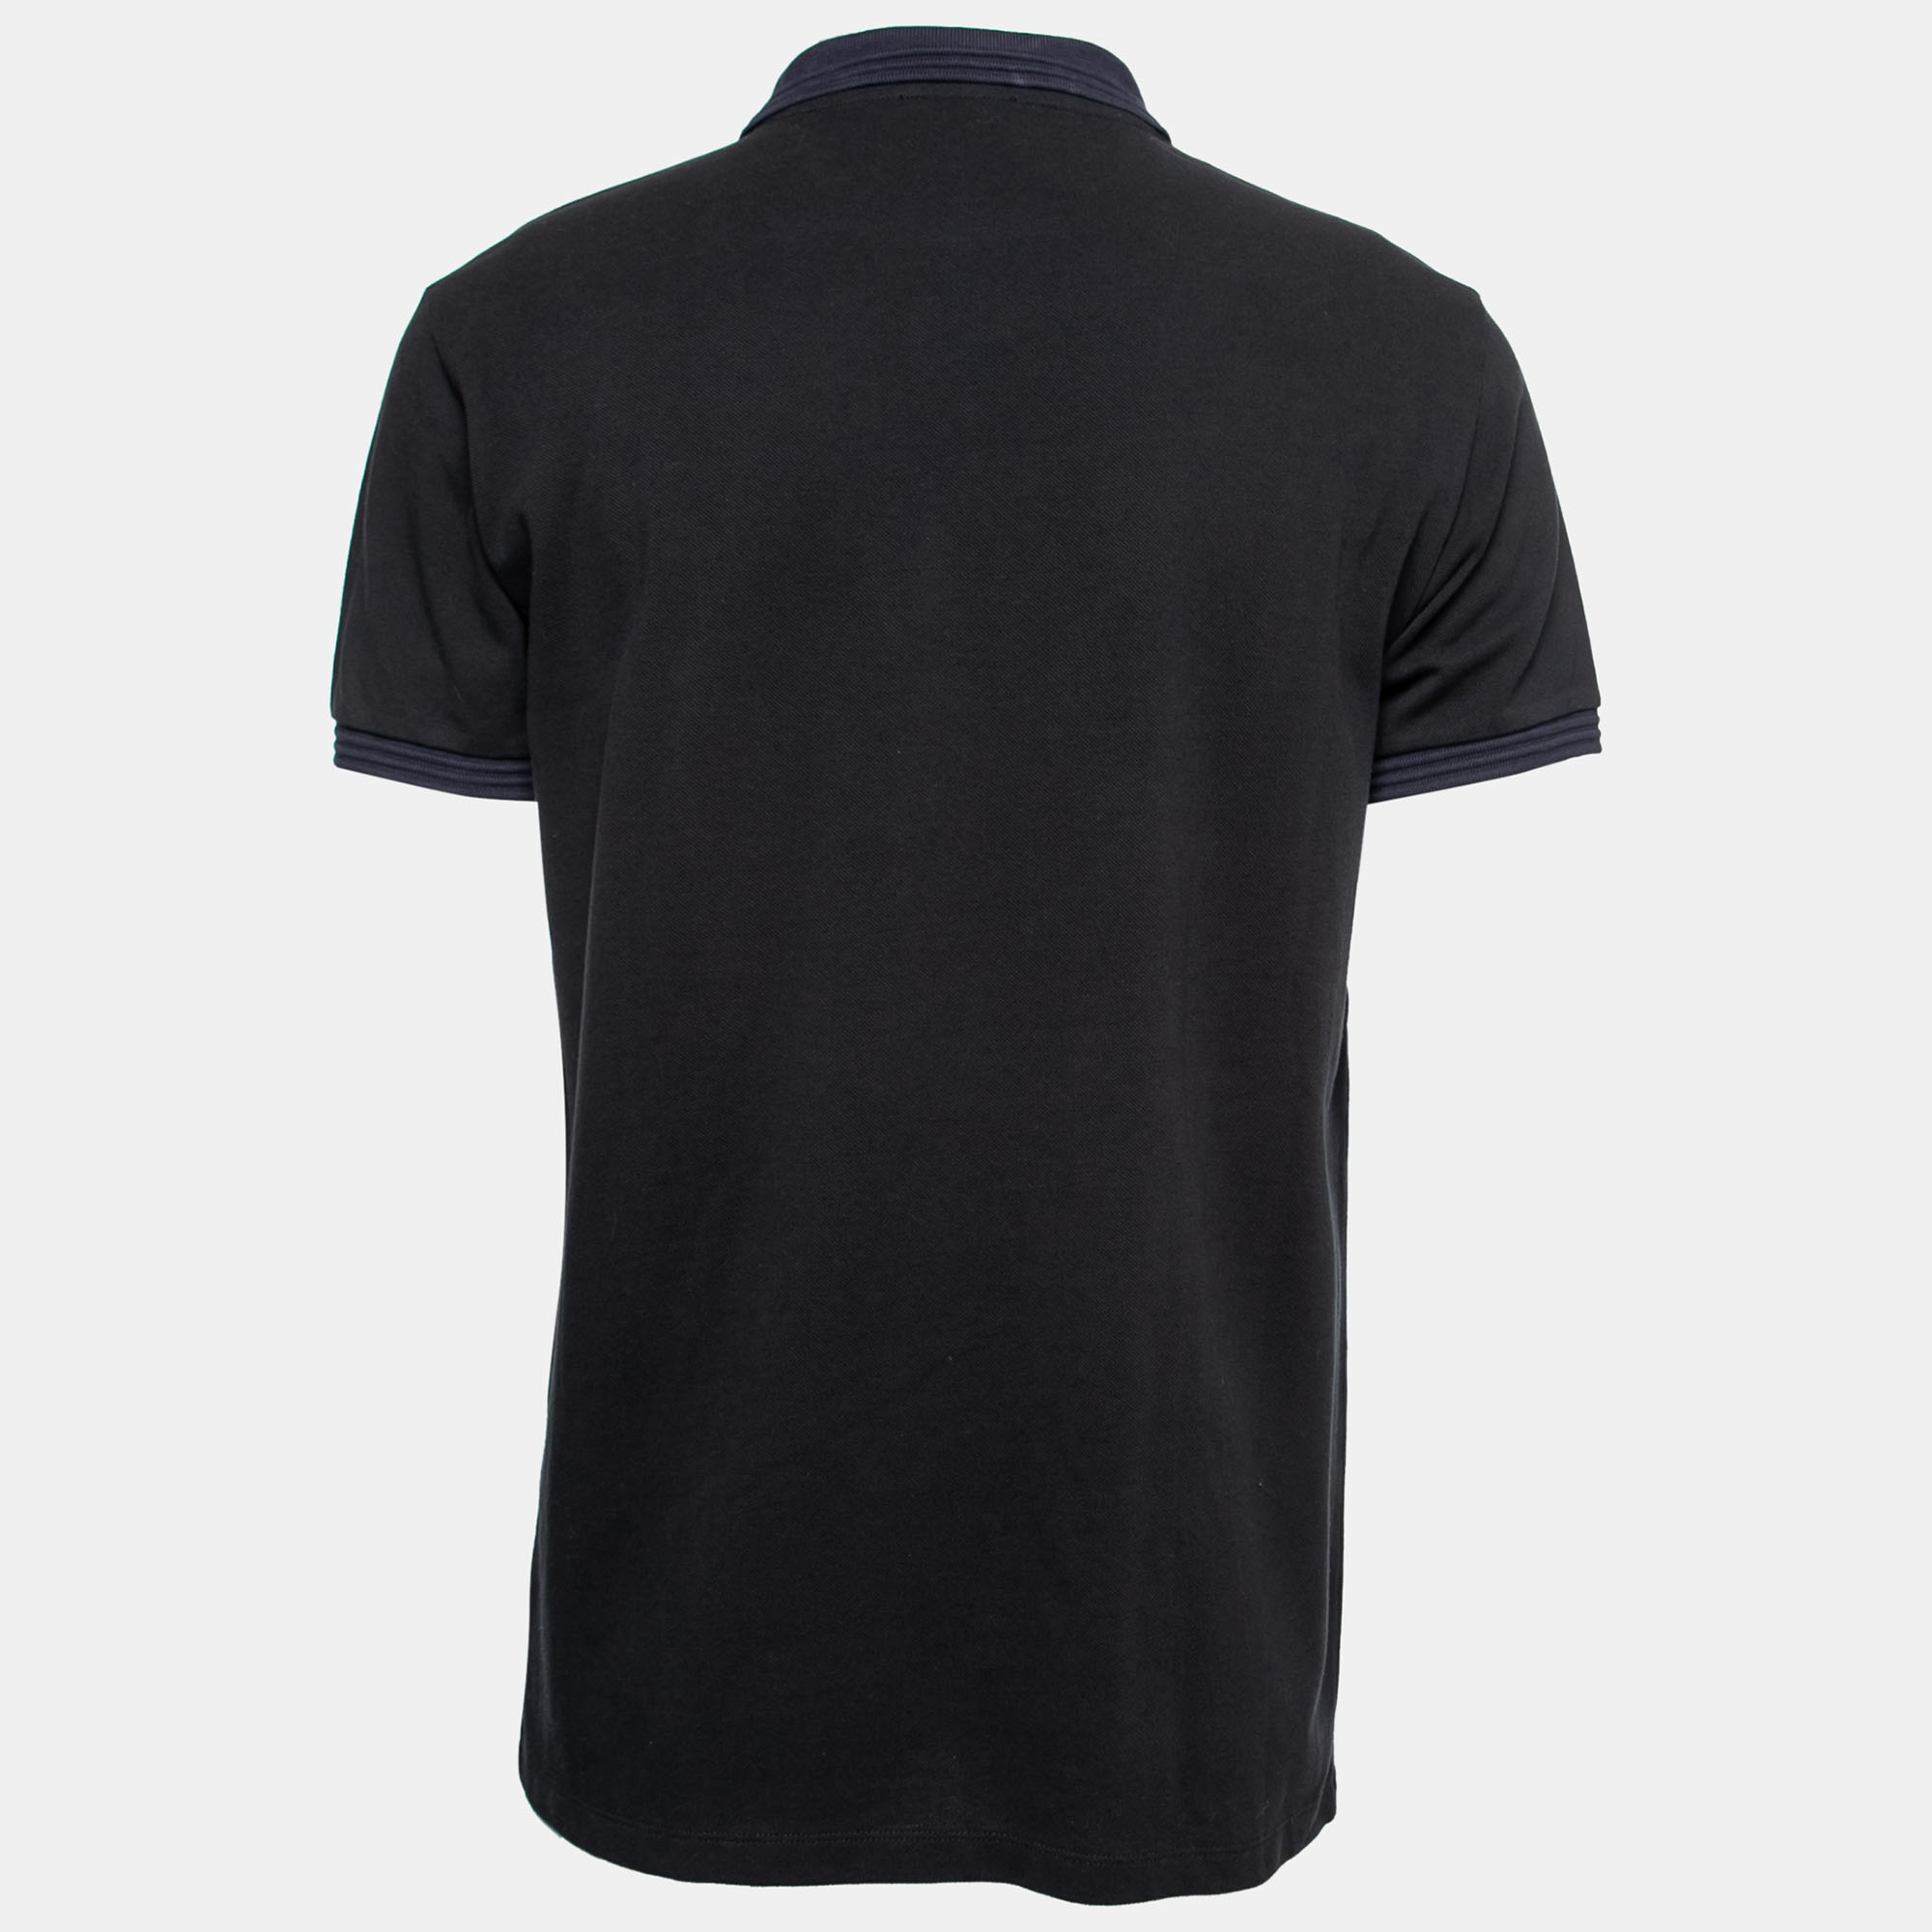 

Emporio Armani Black Cotton Pique Contrast Trimmed Polo T-Shirt